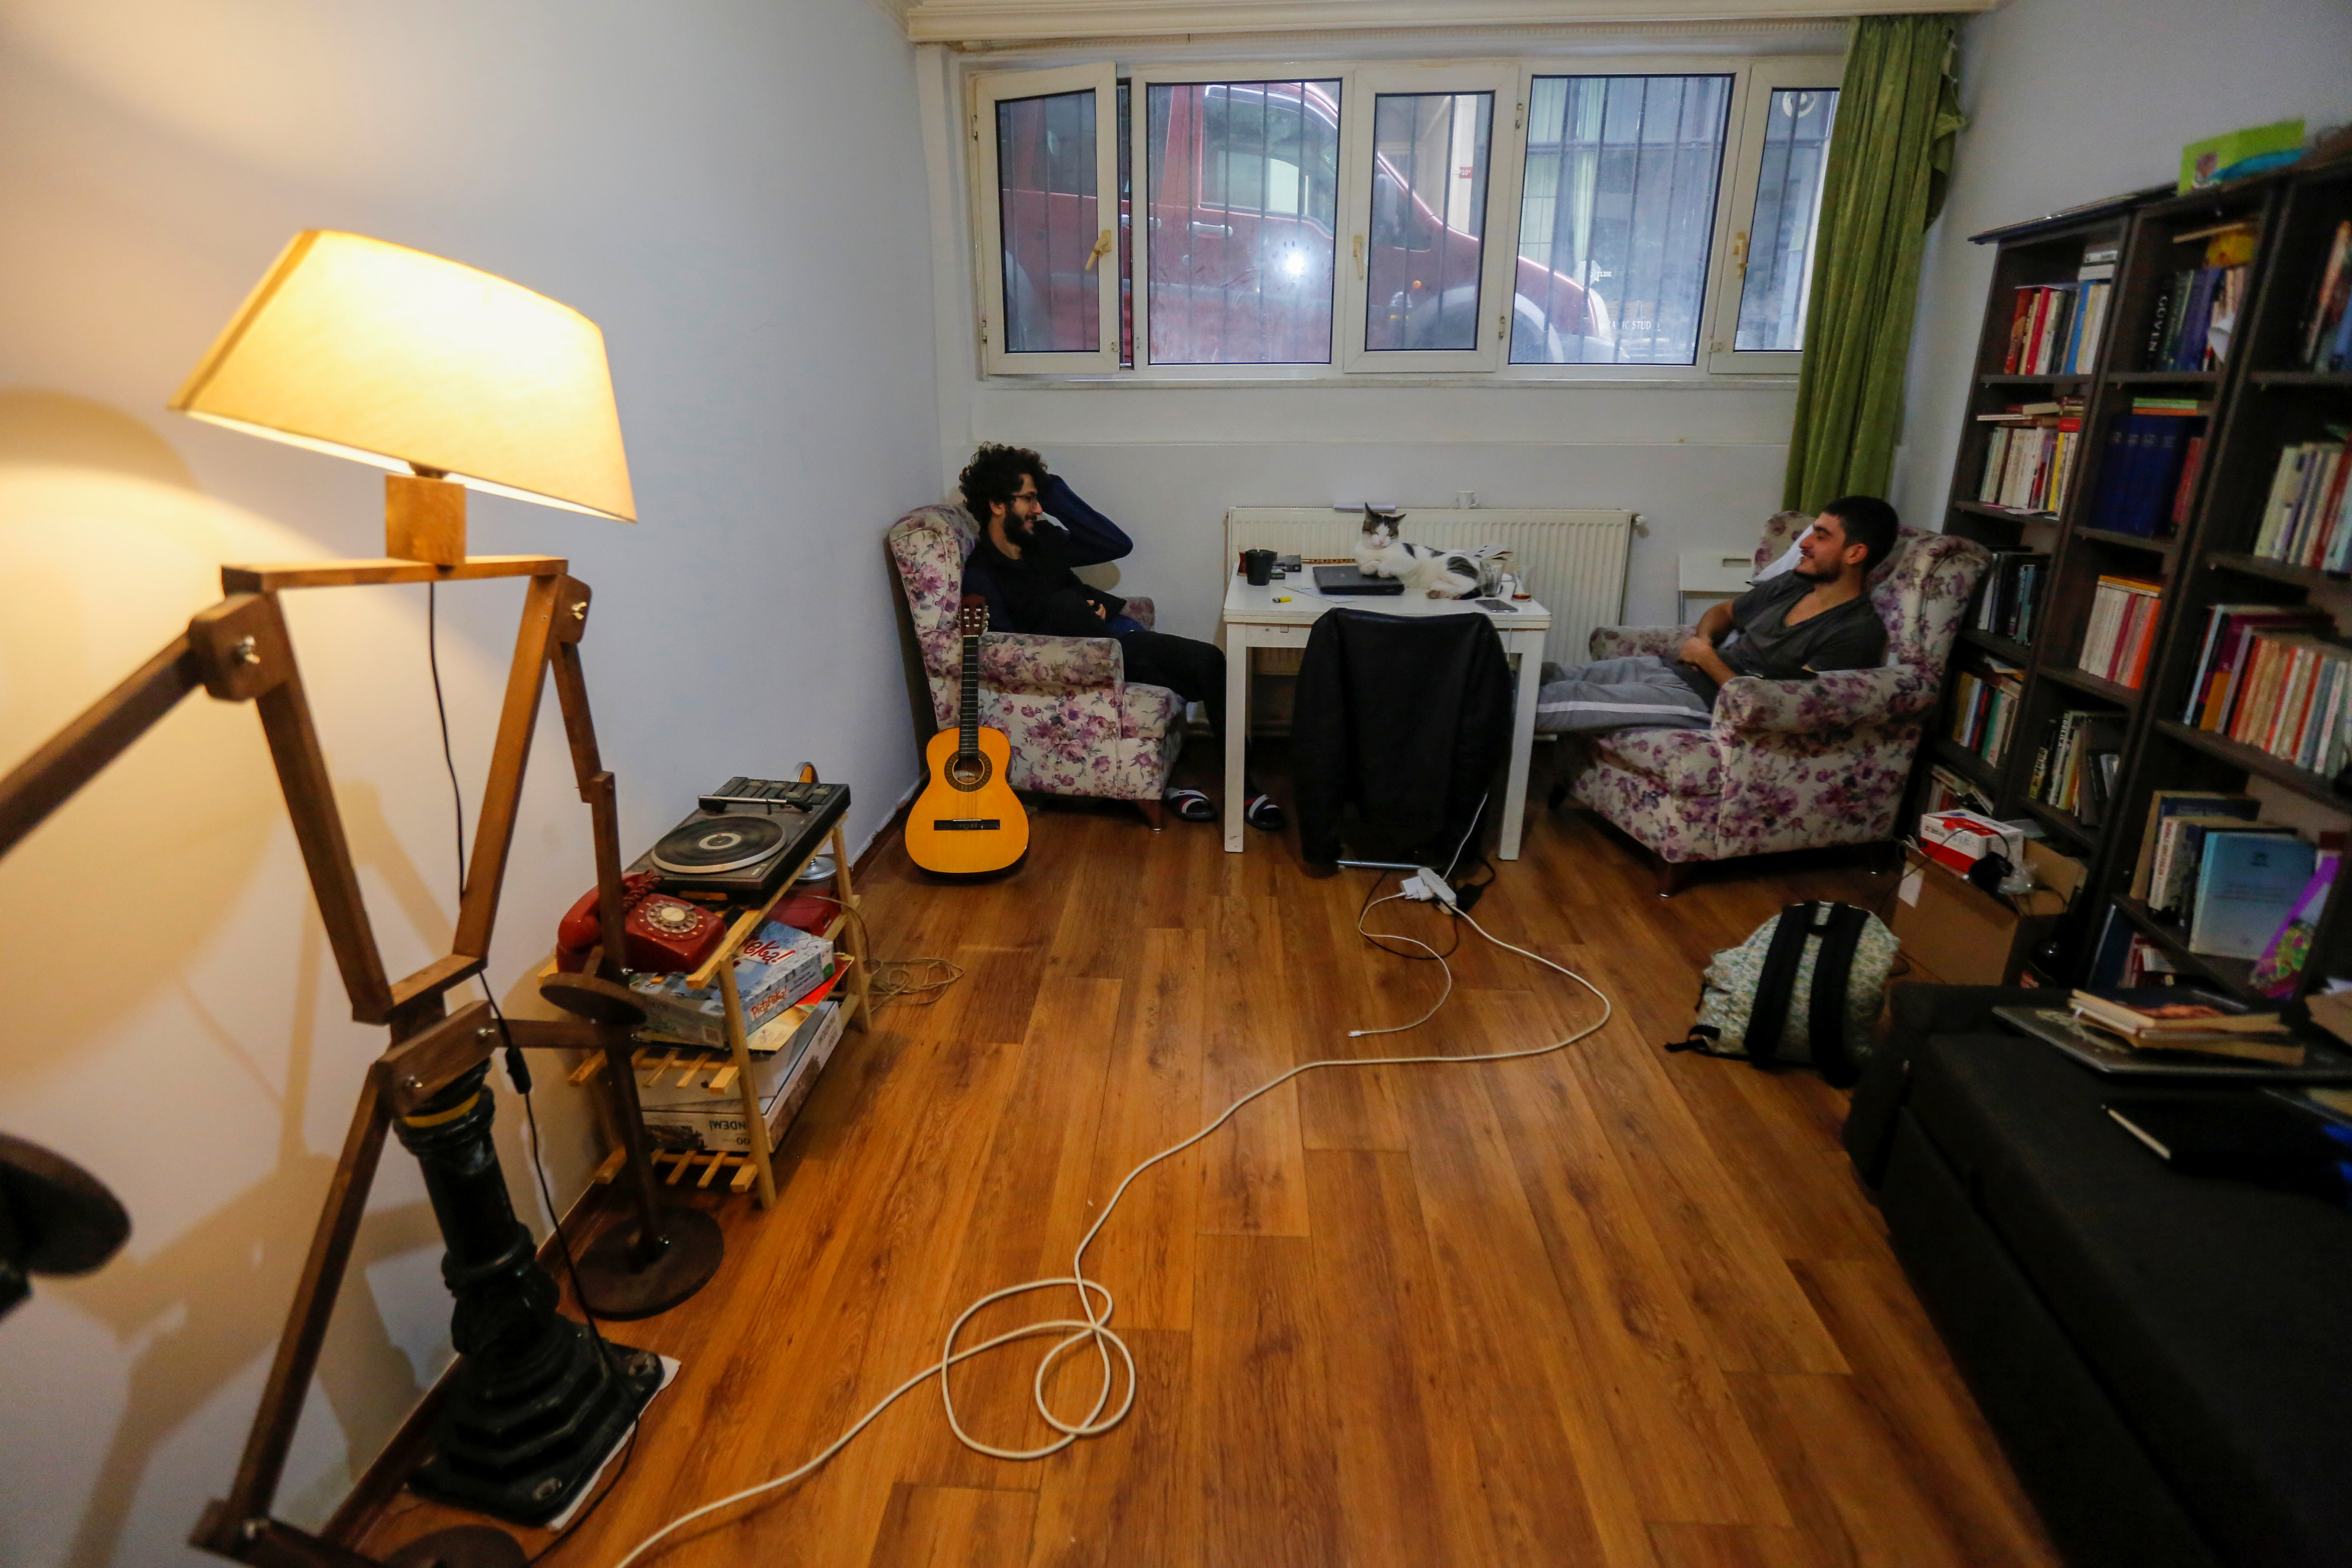 University students Candeniz Aksu and Yunus Karaca chat in their rented home in Istanbul